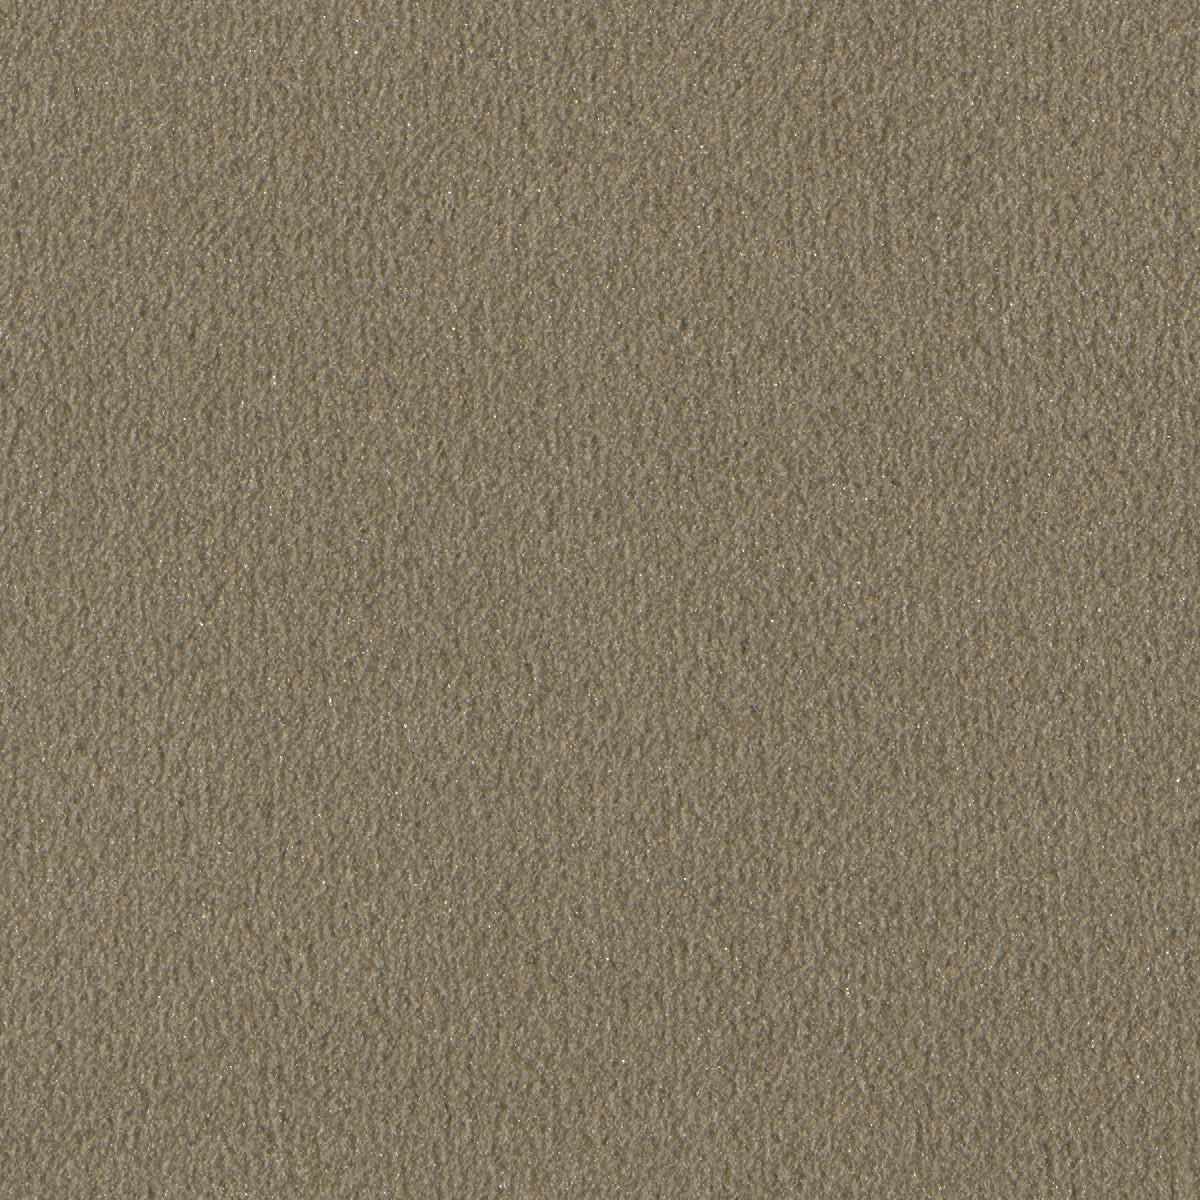 Fabric Sample Full Cover - Bronze